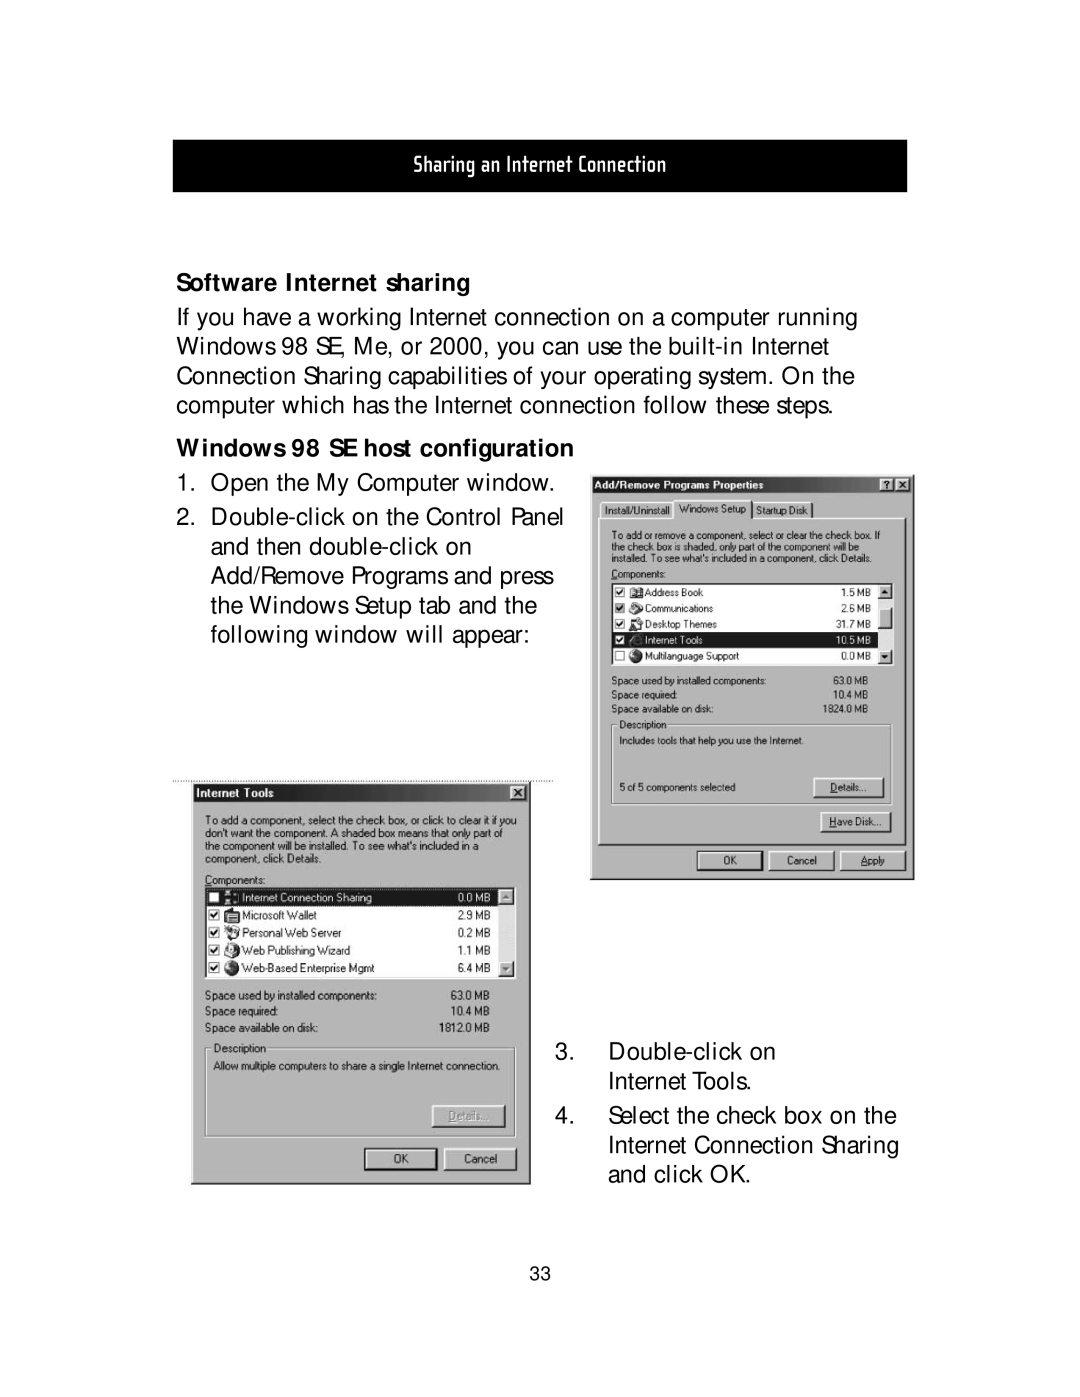 Belkin F5D5000t manual Software Internet sharing, Windows 98 SE host configuration, Sharing an Internet Connection 